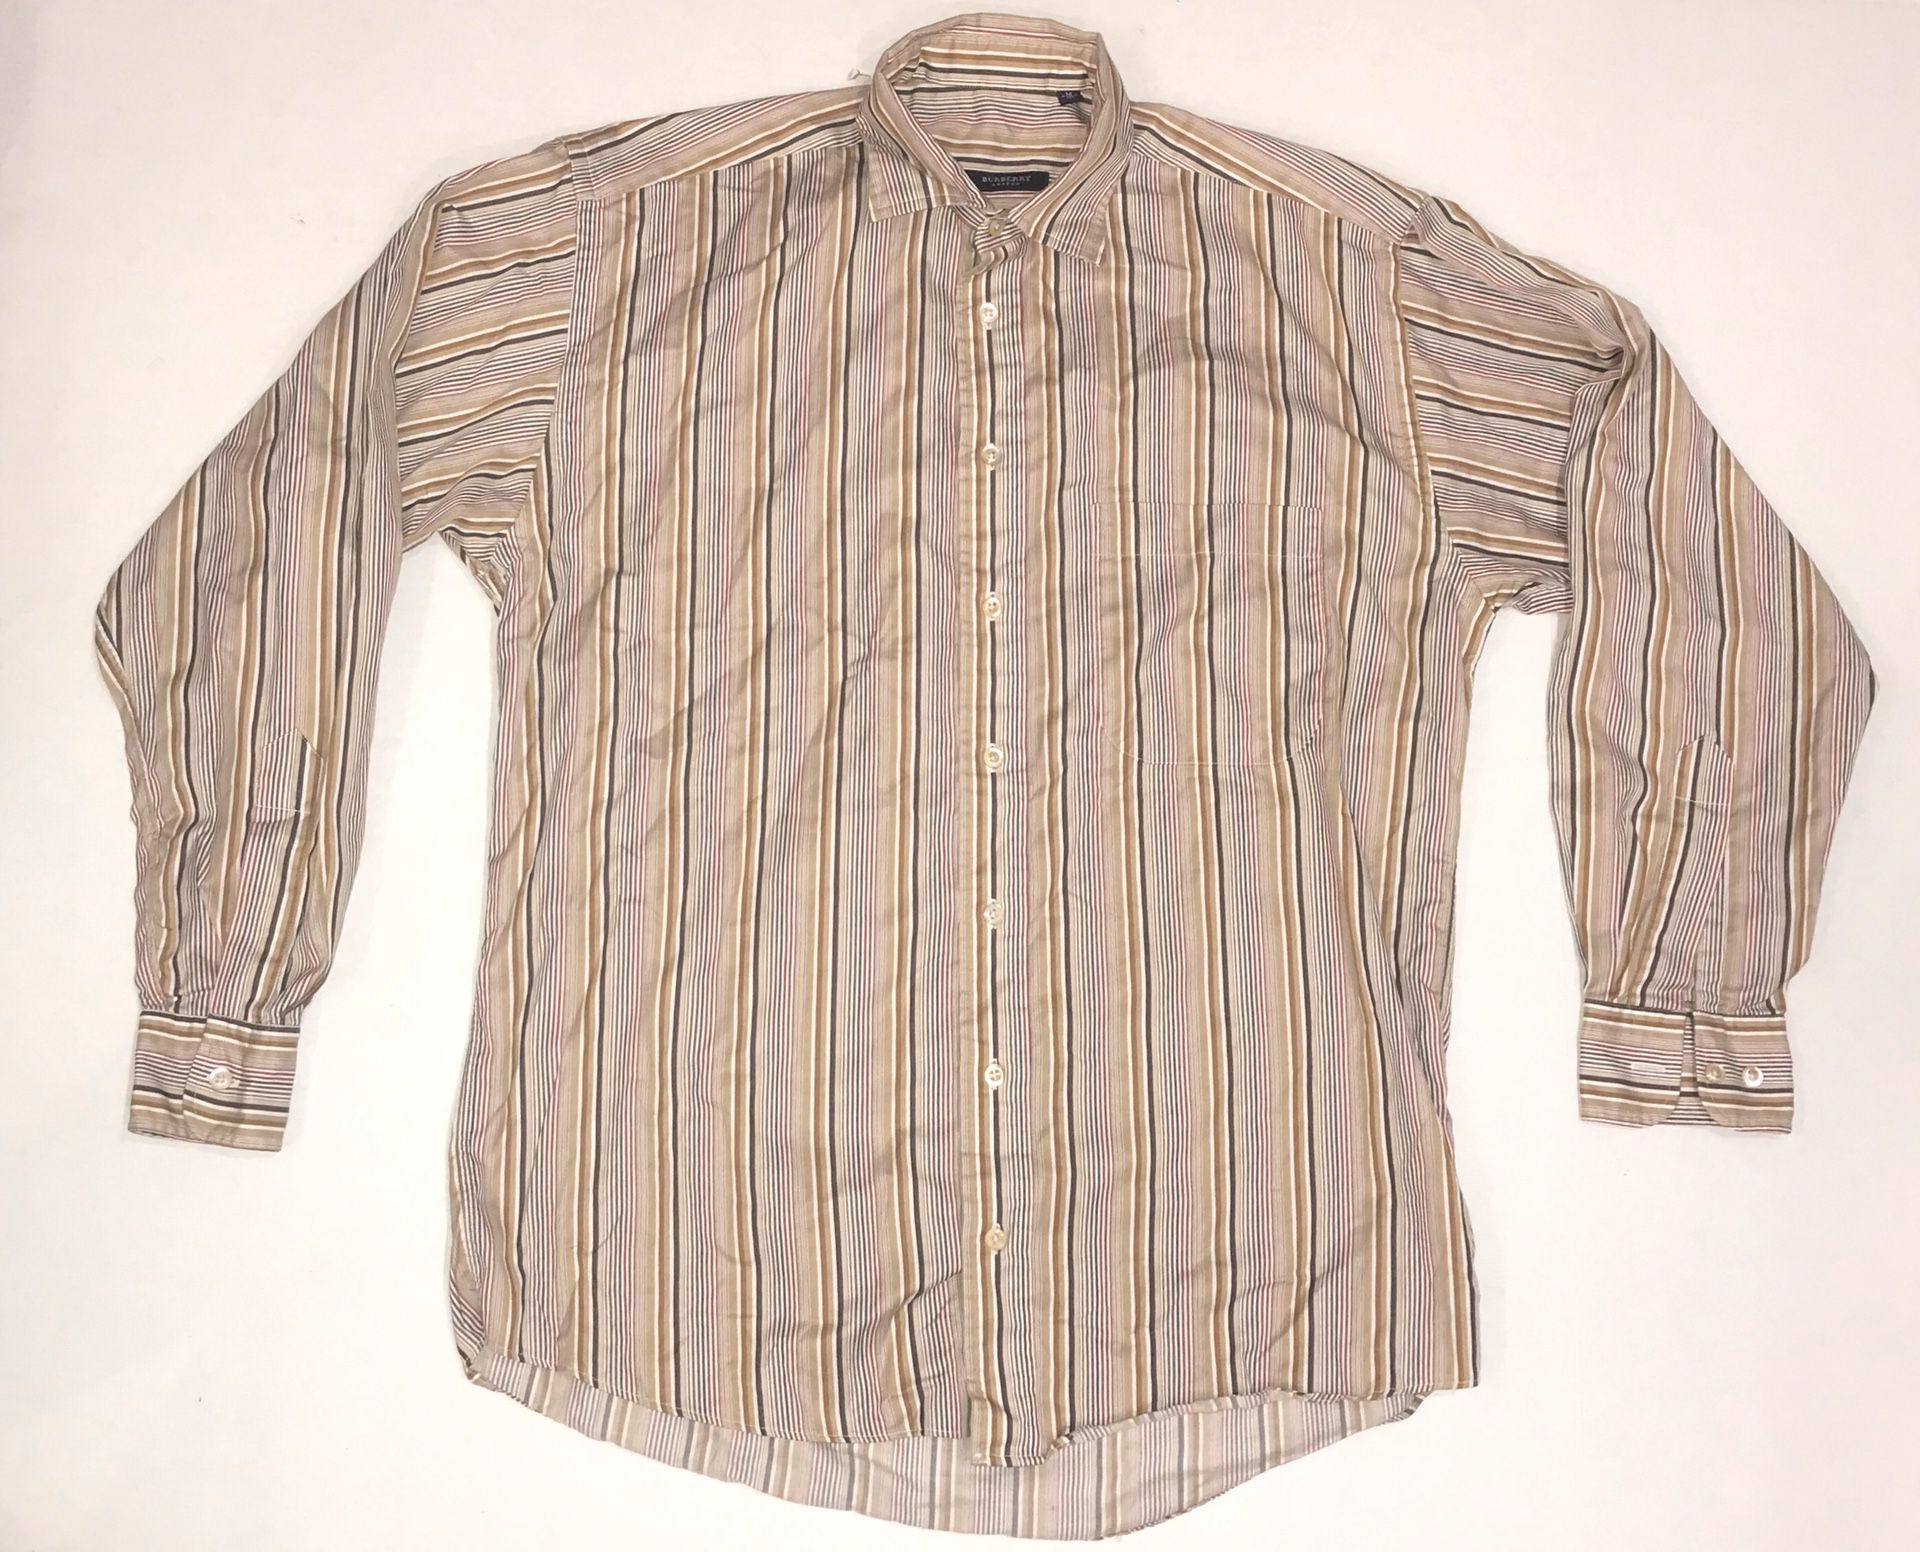 Burberry multiple color striped dress shirt men’s size medium